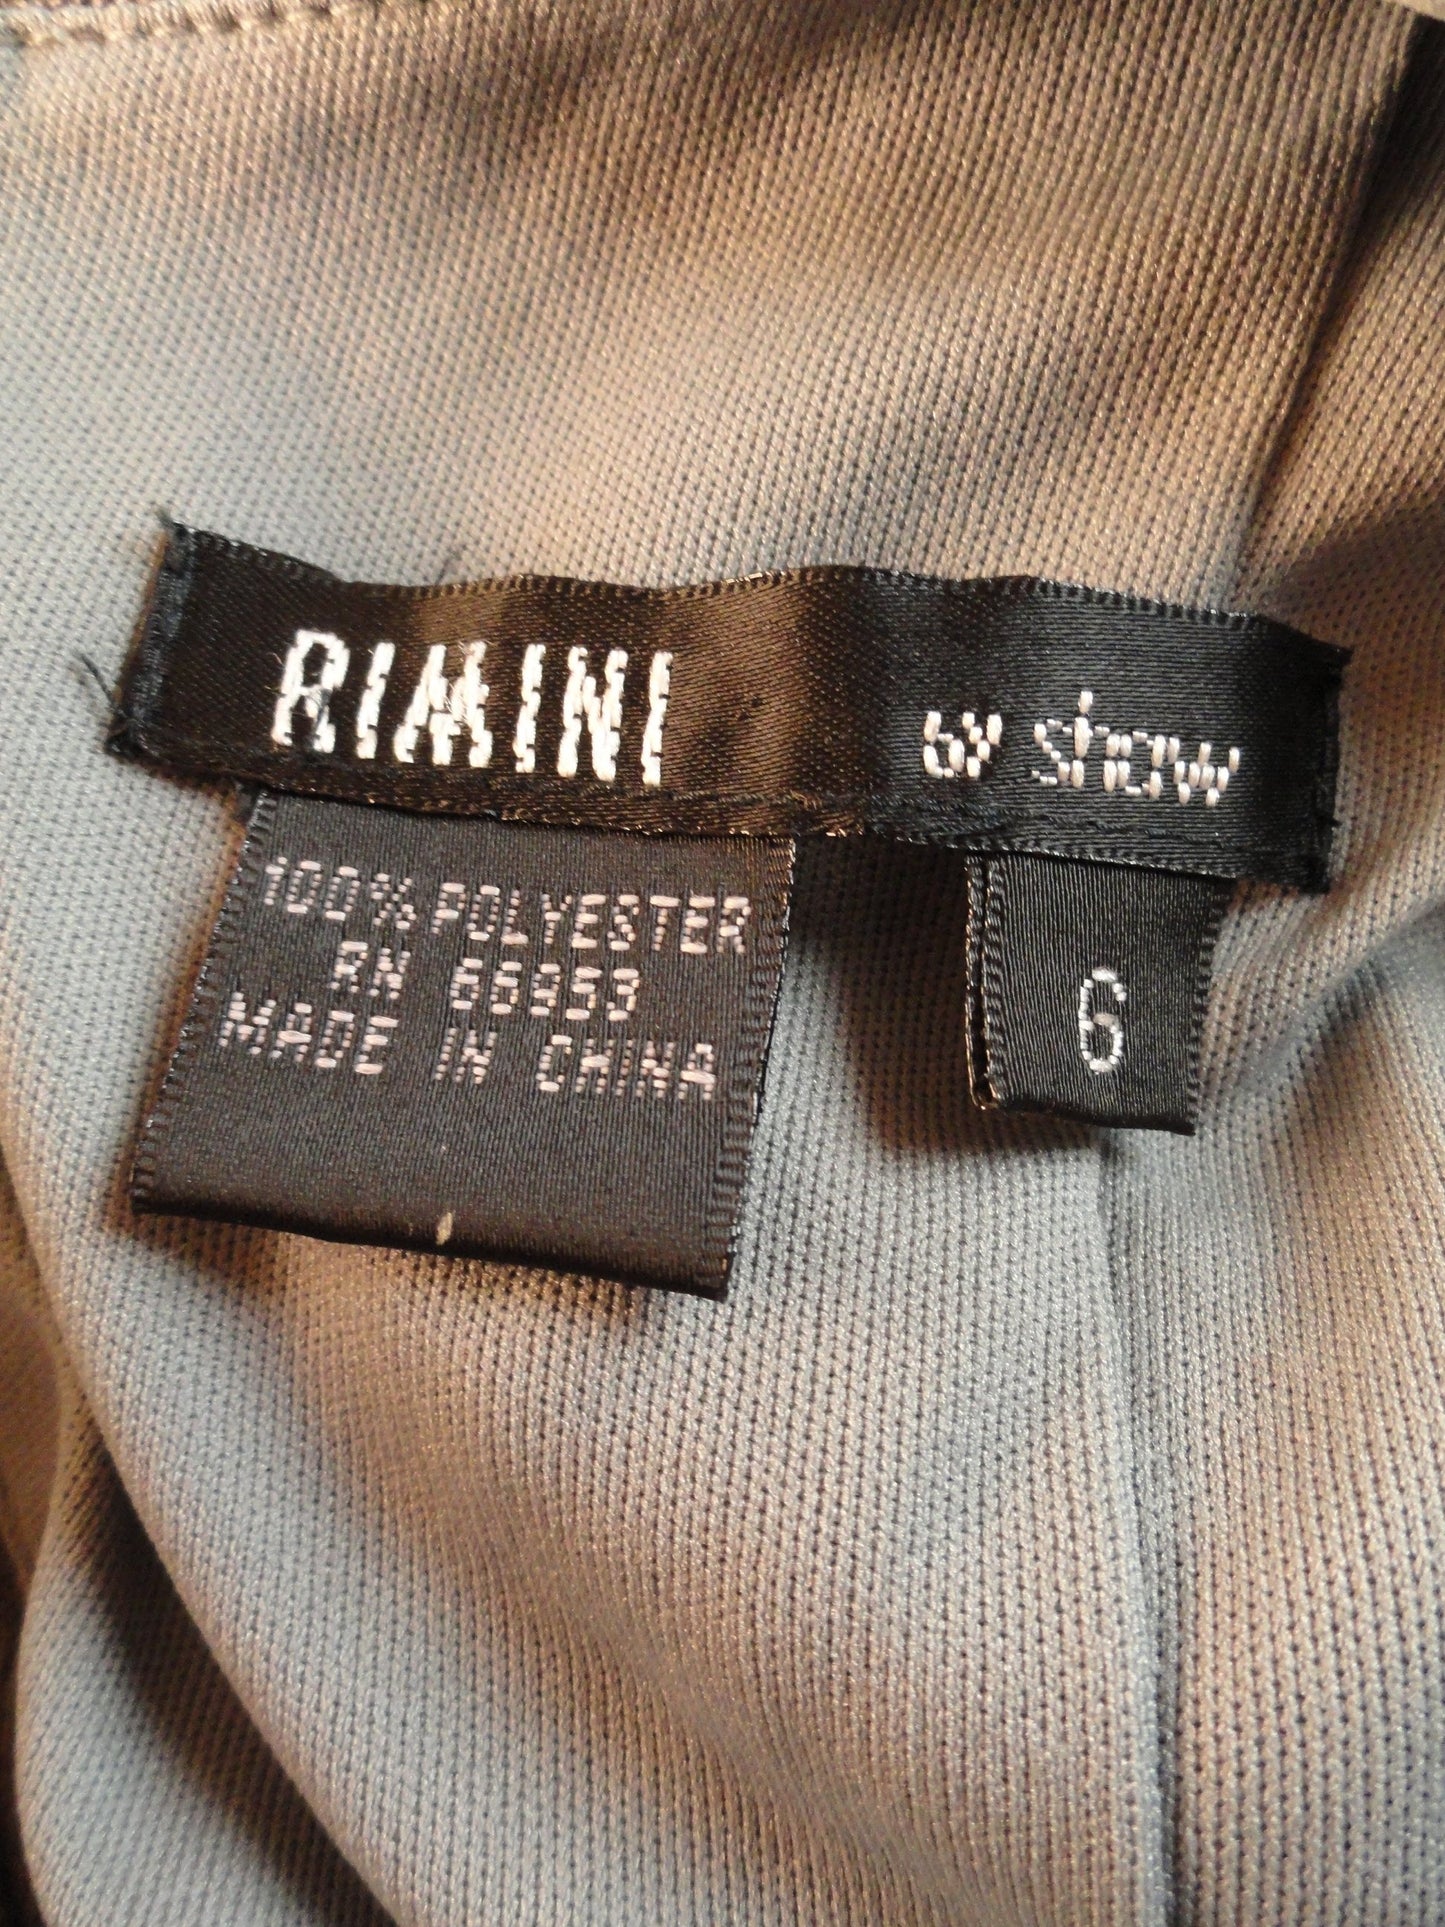 RIMINI Dress Grey Mesh Size 6 SKU 000085